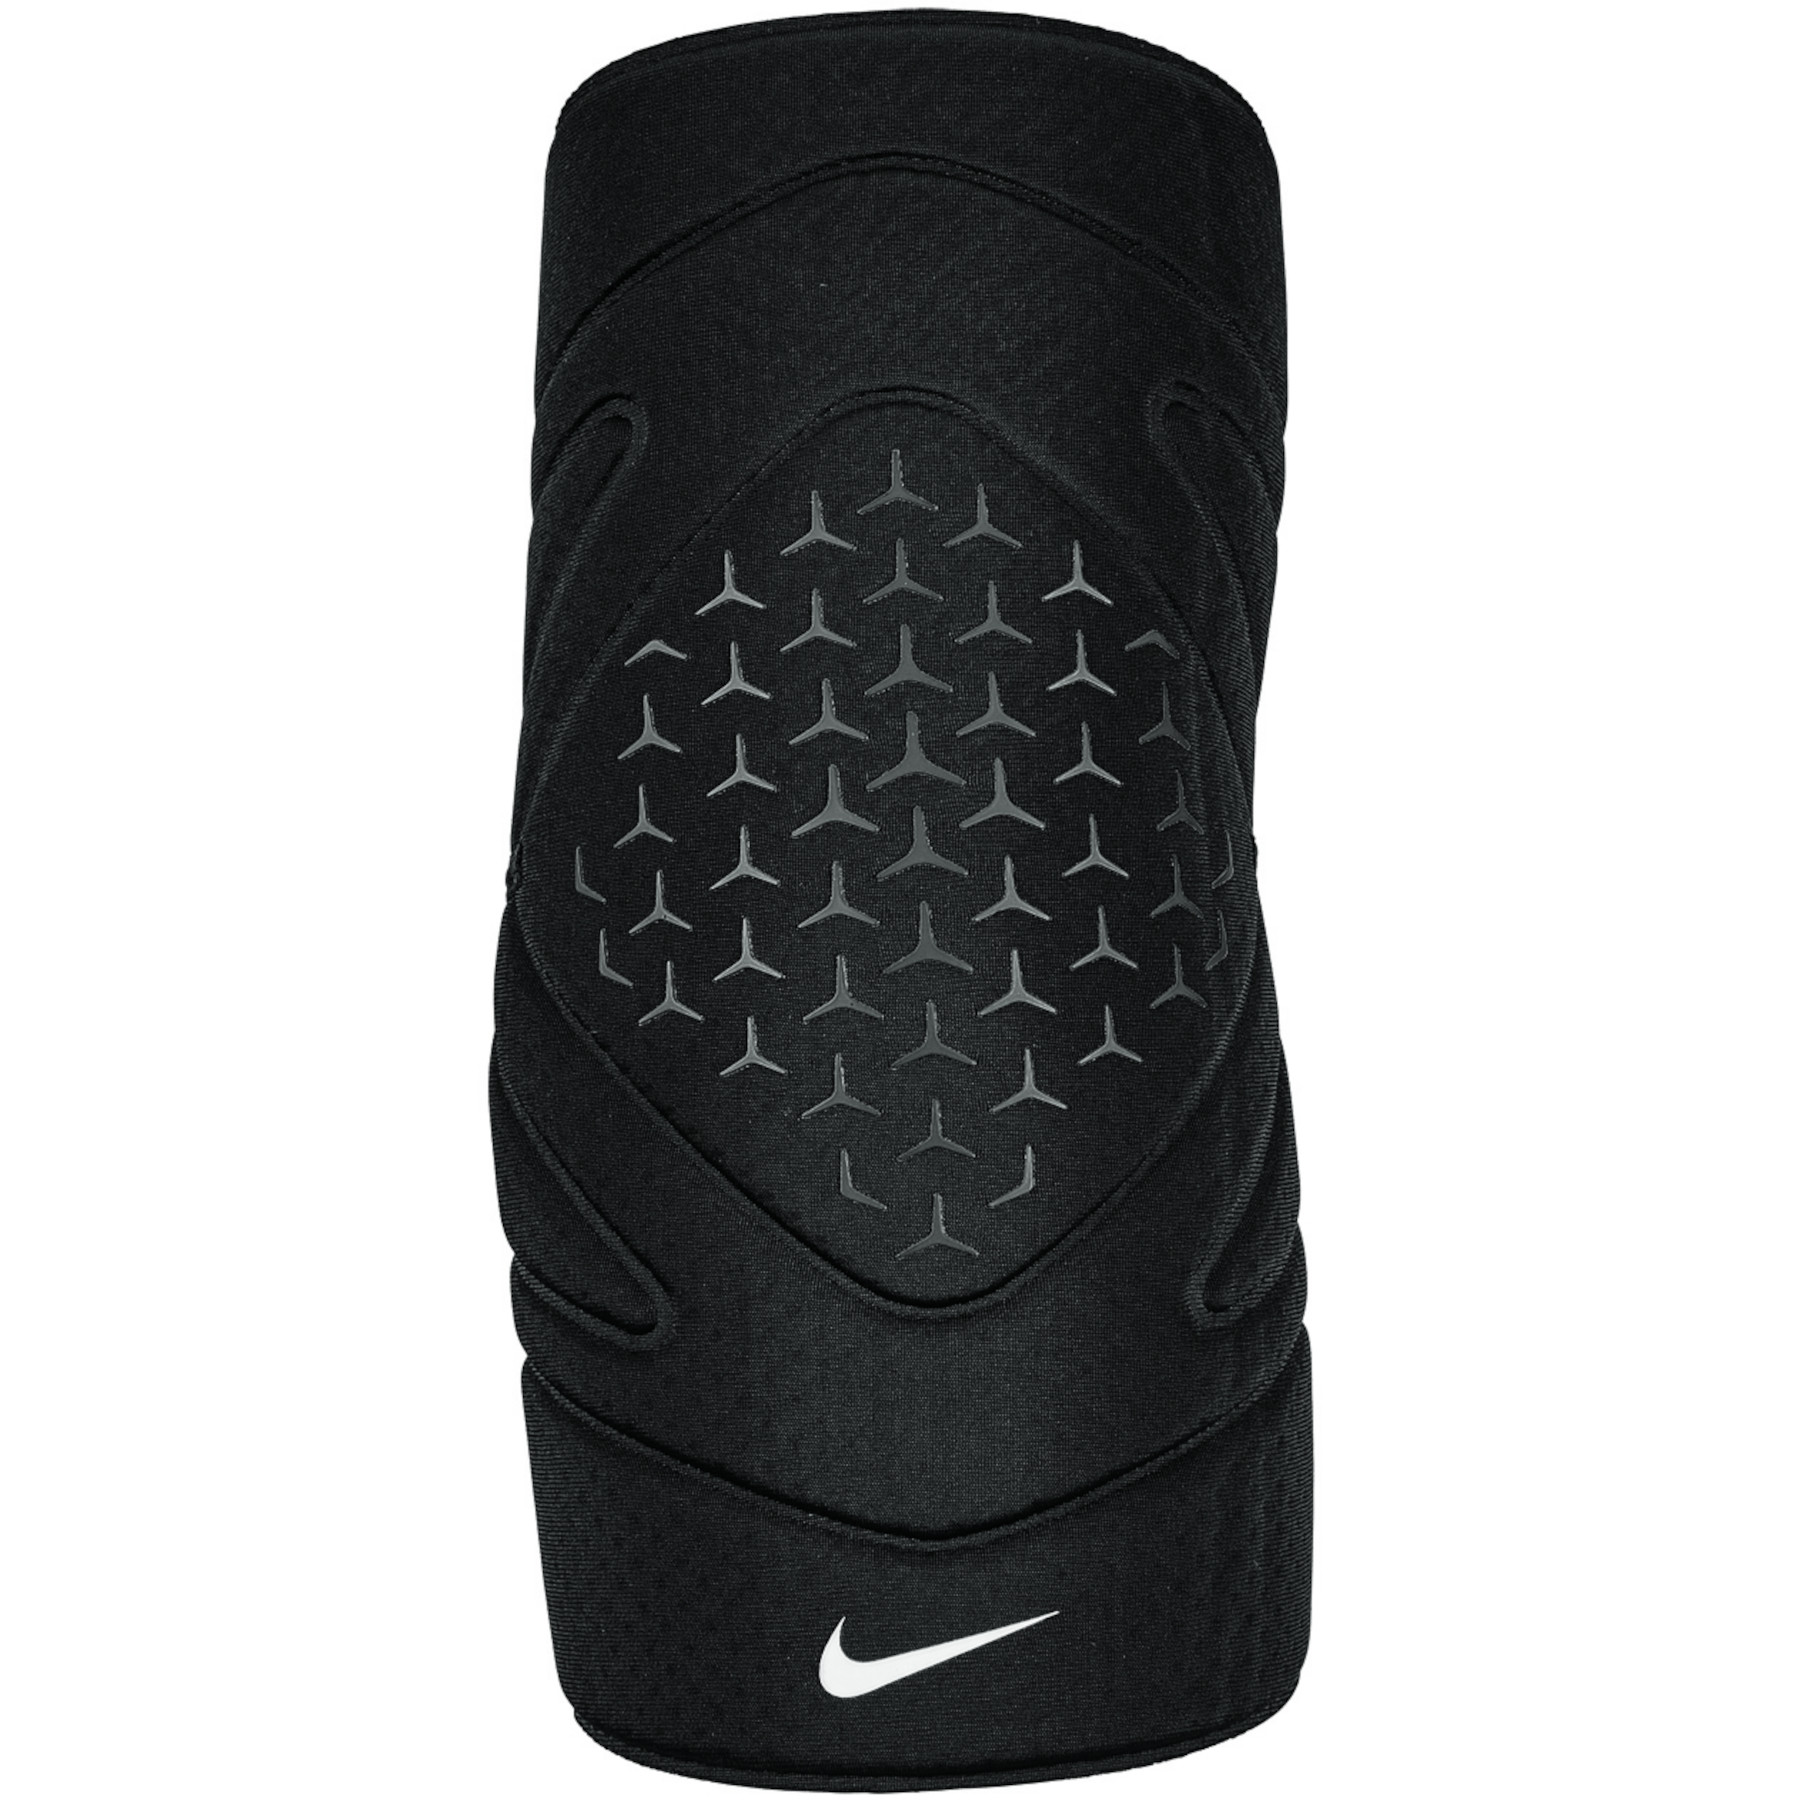 Produktbild von Nike Pro Elbow Sleeve 3.0 Ellbogenbandage - black/white 010